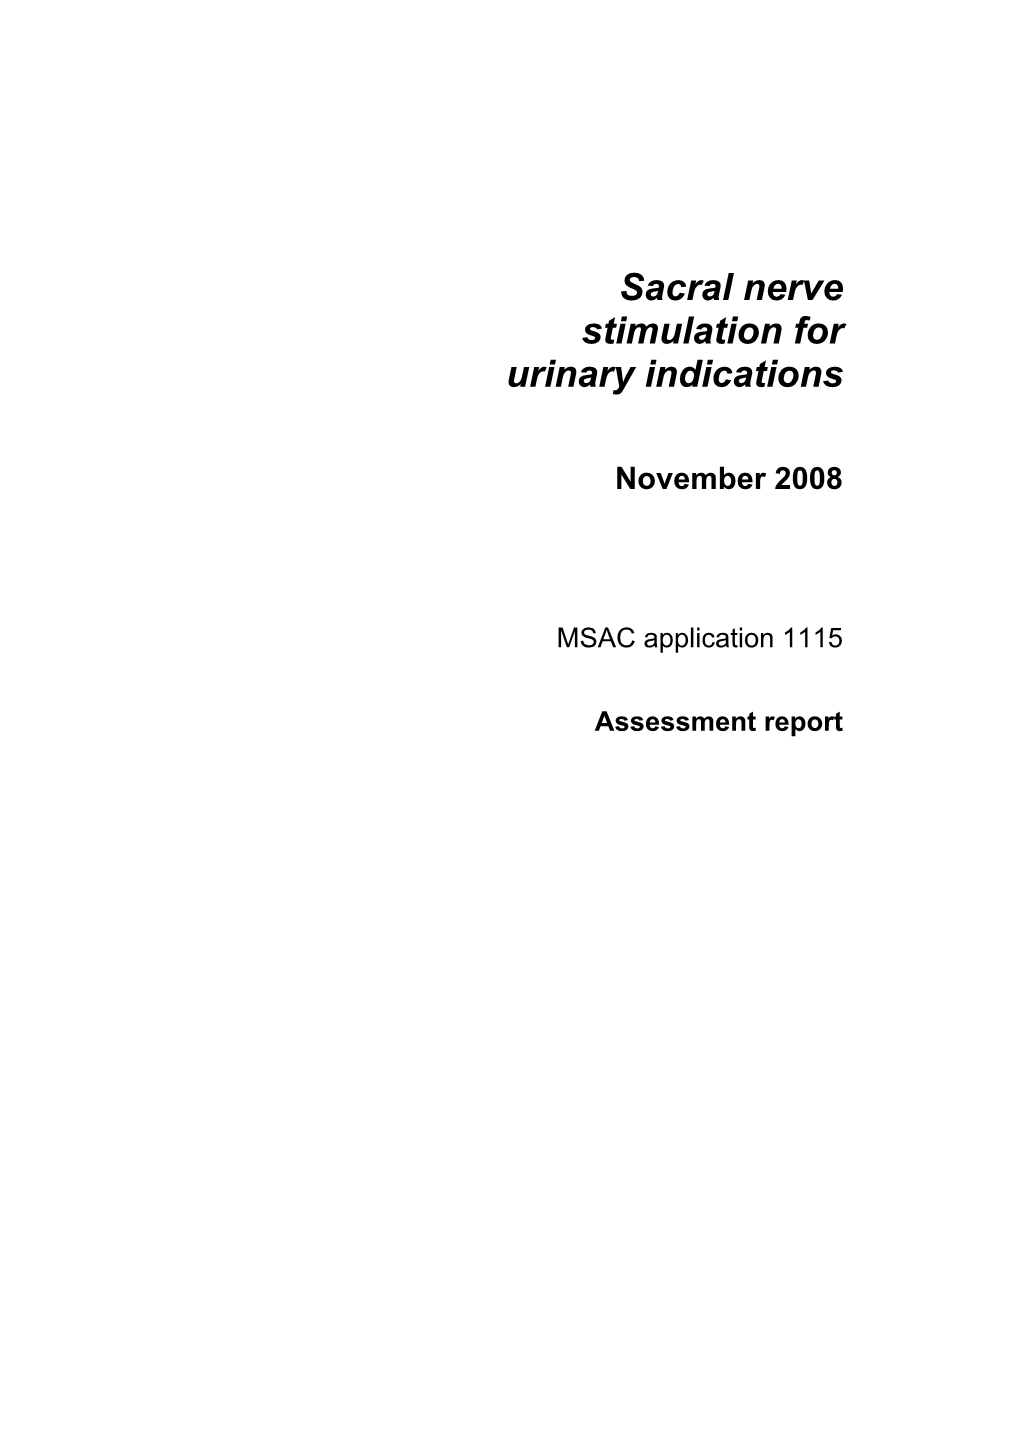 Sacral Nerve Stimulation for Urinary Indications